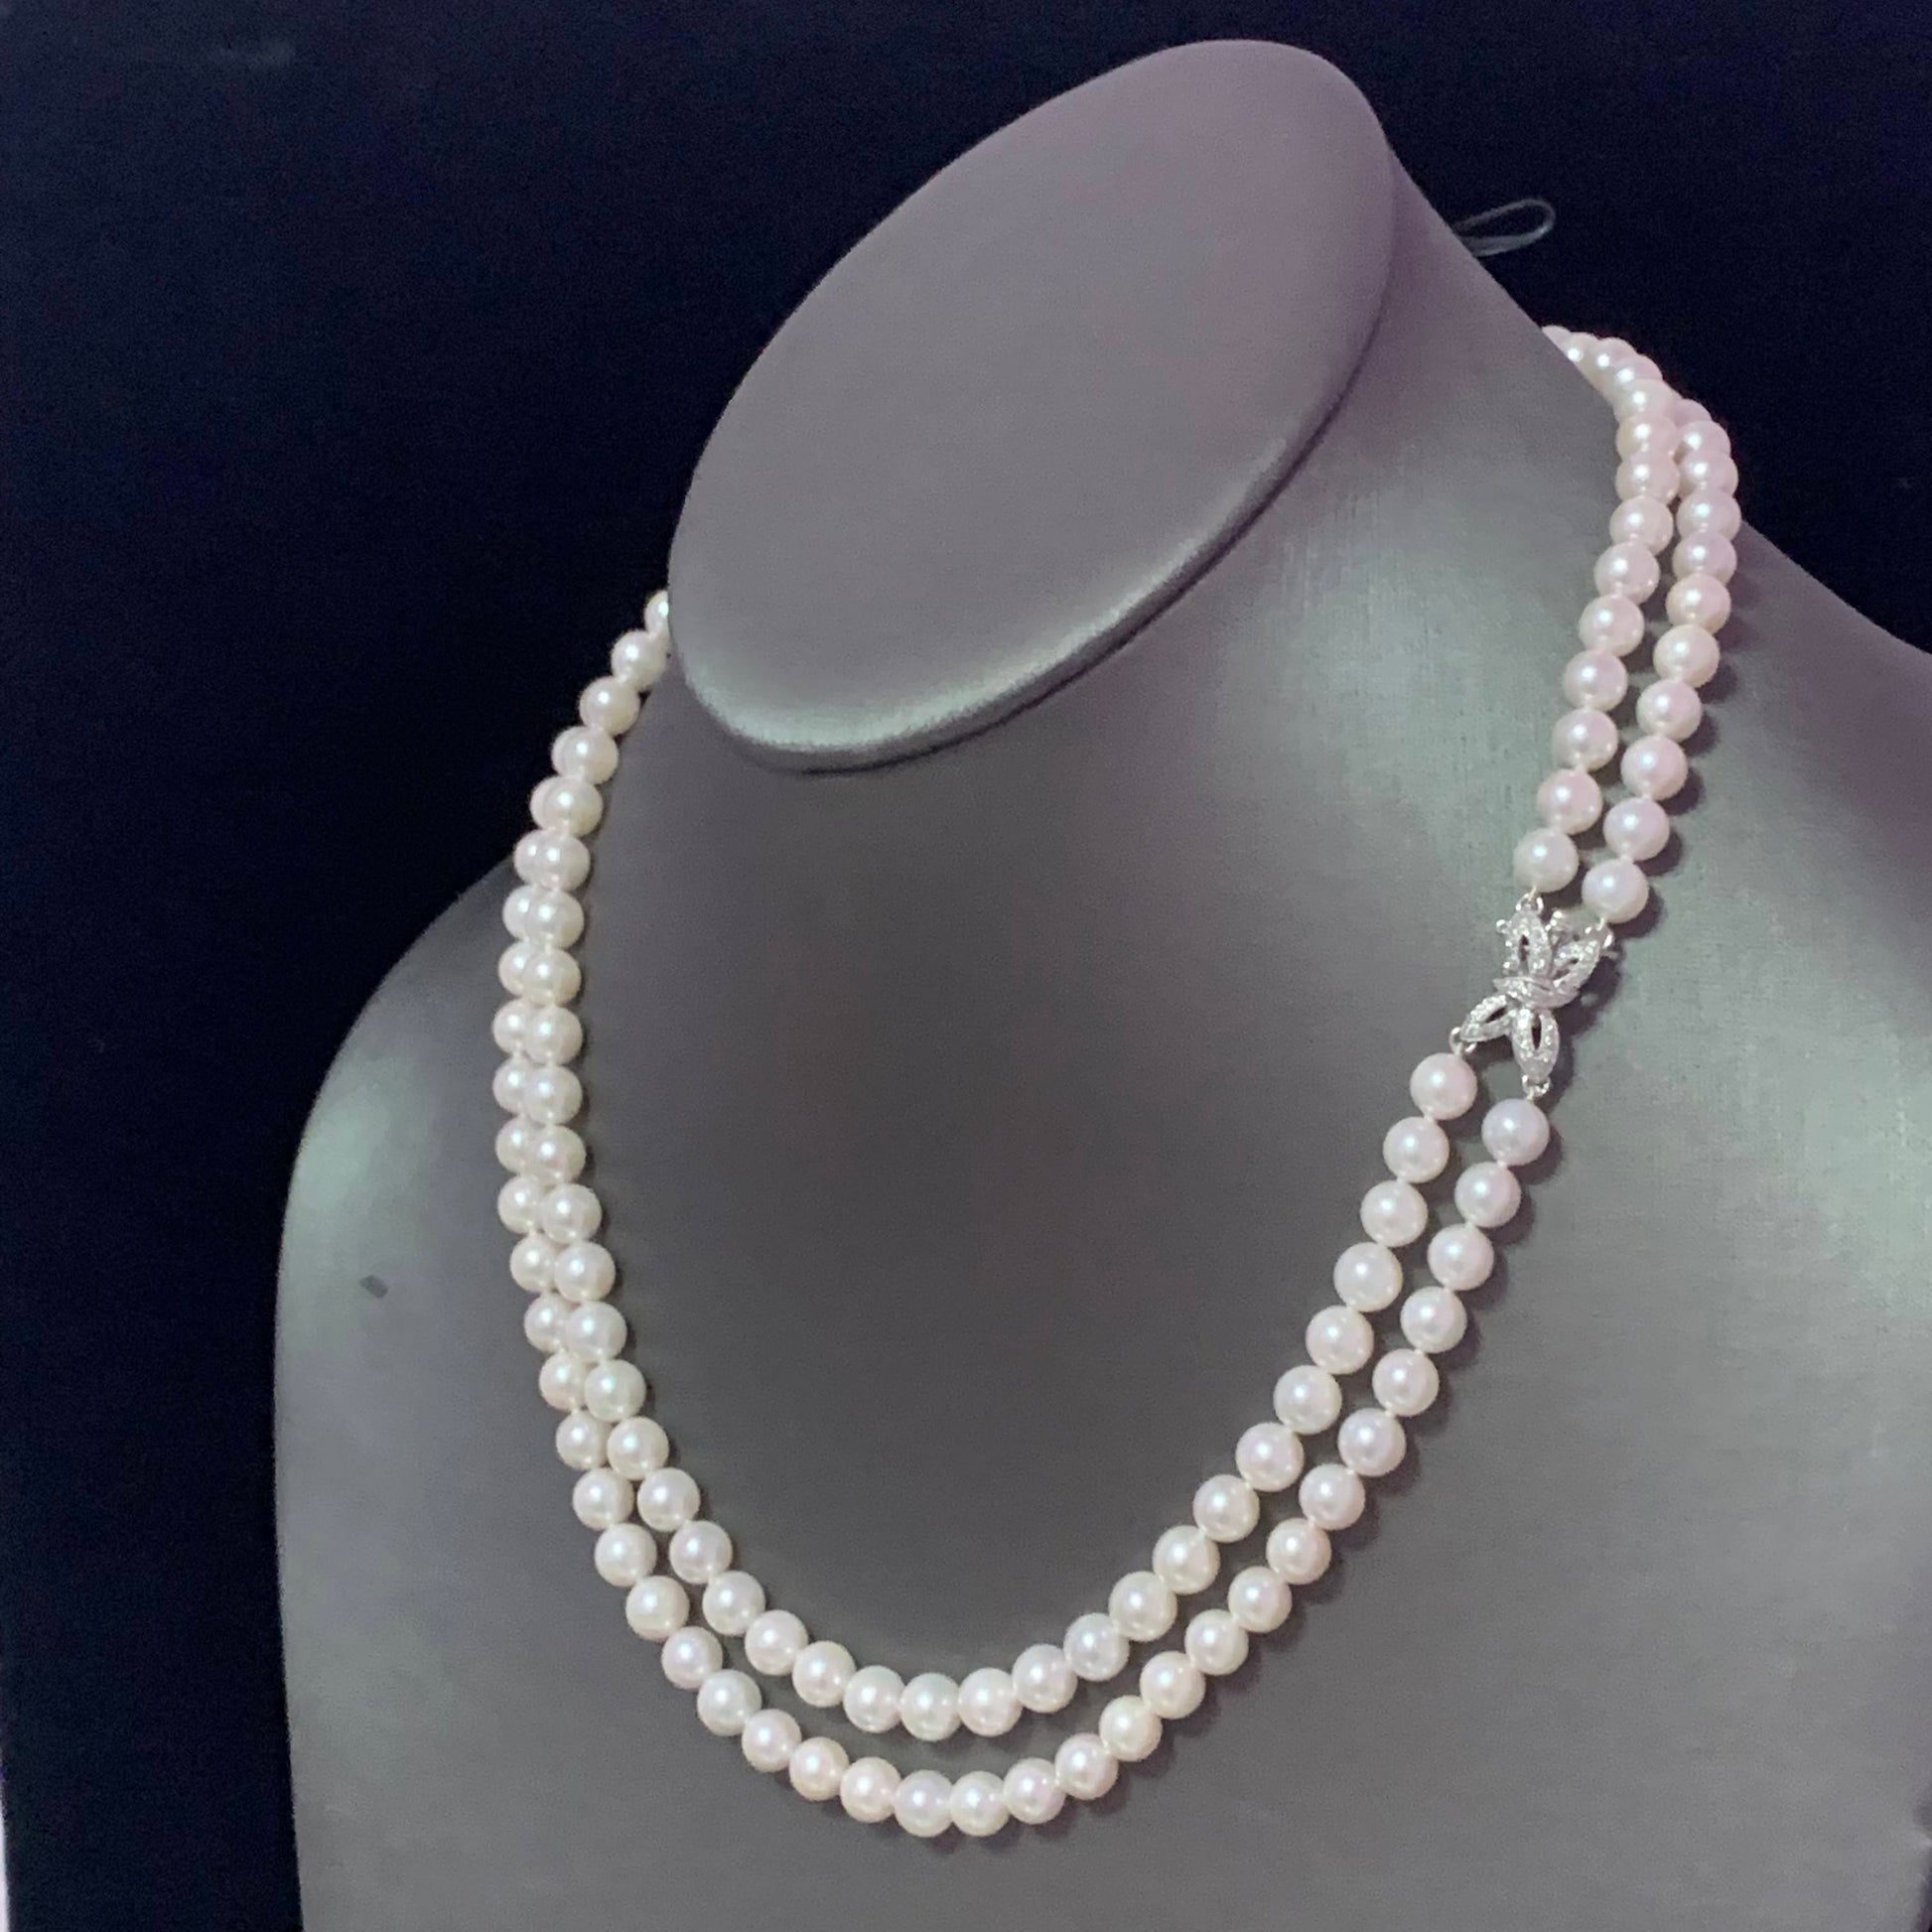 Diamond Akoya Pearl Necklace 18" 14k Gold 6.5 mm Certified $5,950 117515 - Certified Fine Jewelry